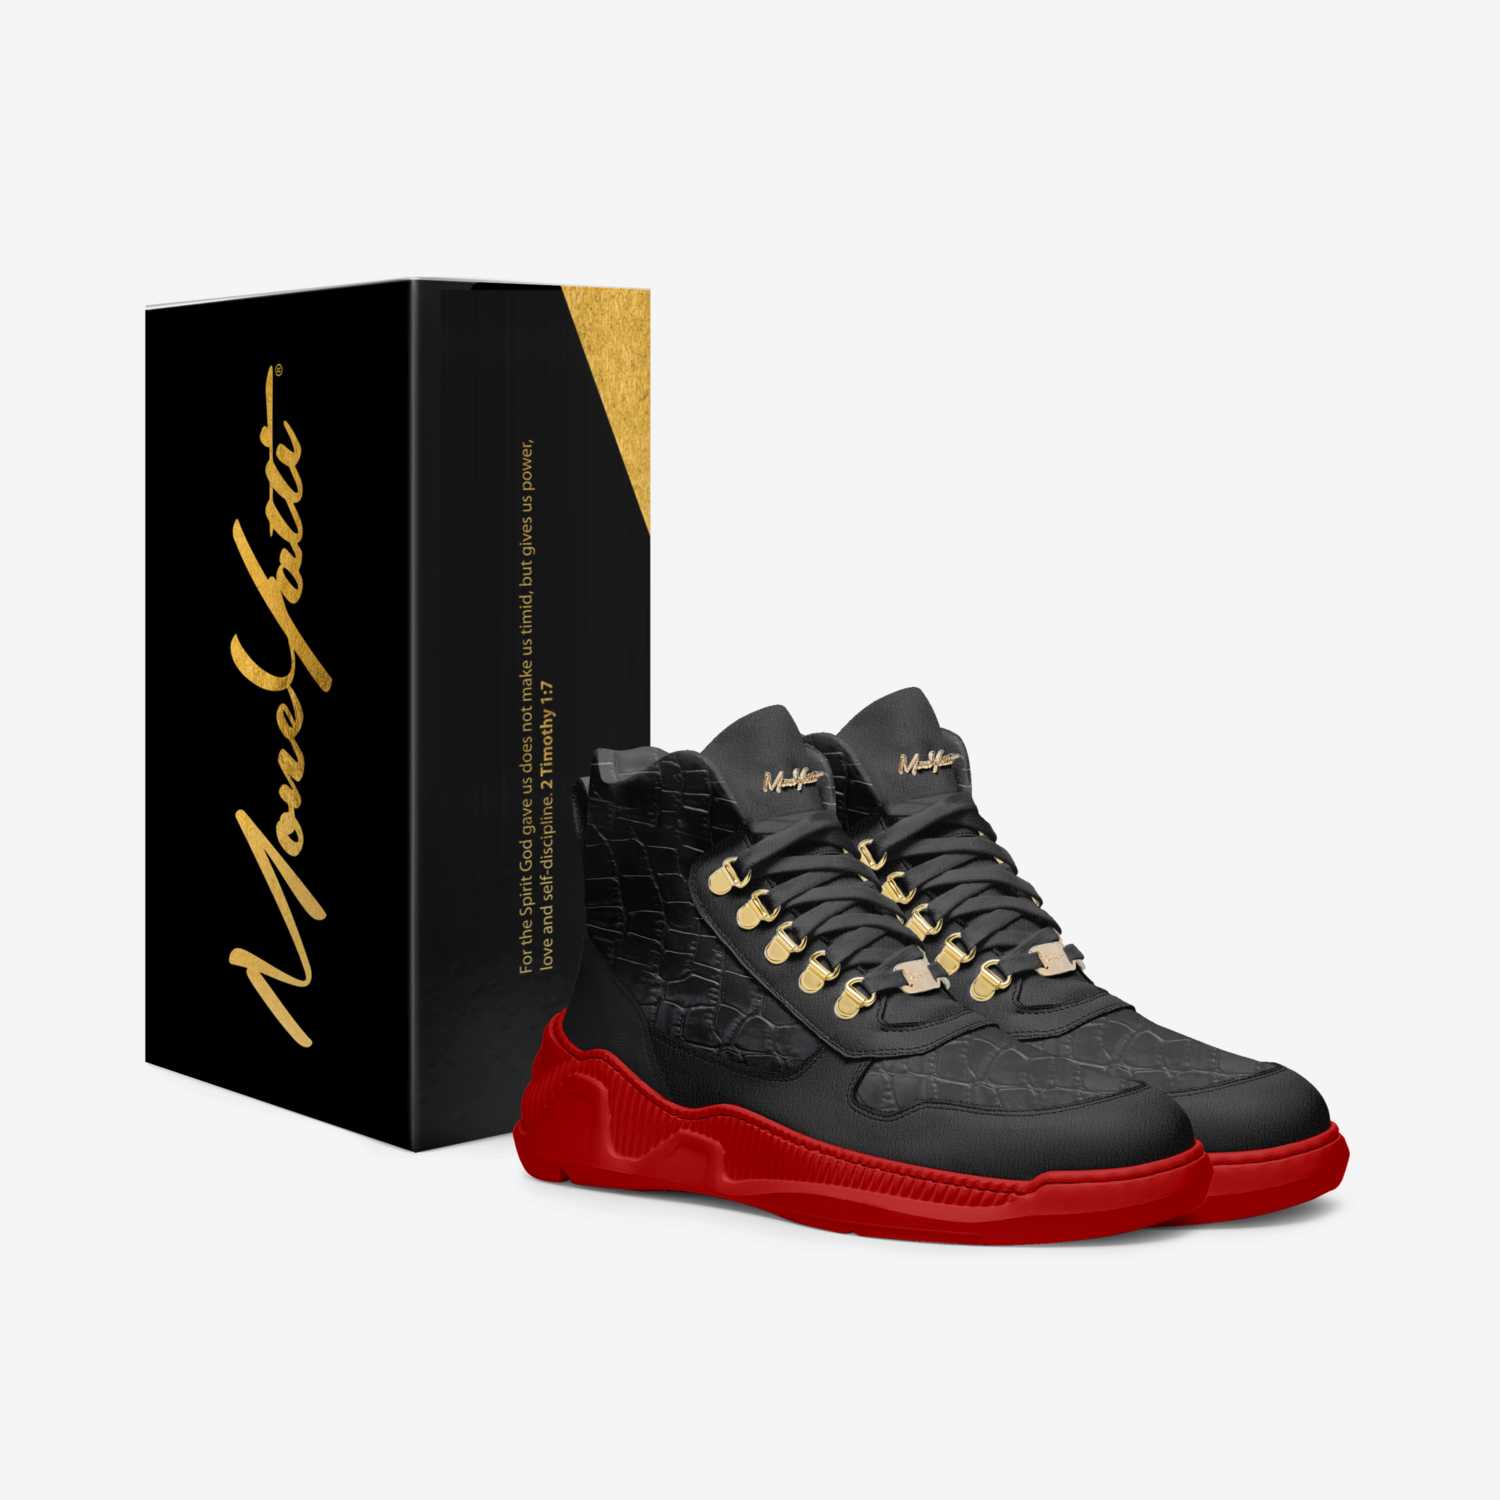 Moneyatti Traps301 custom made in Italy shoes by Moneyatti Brand | Box view